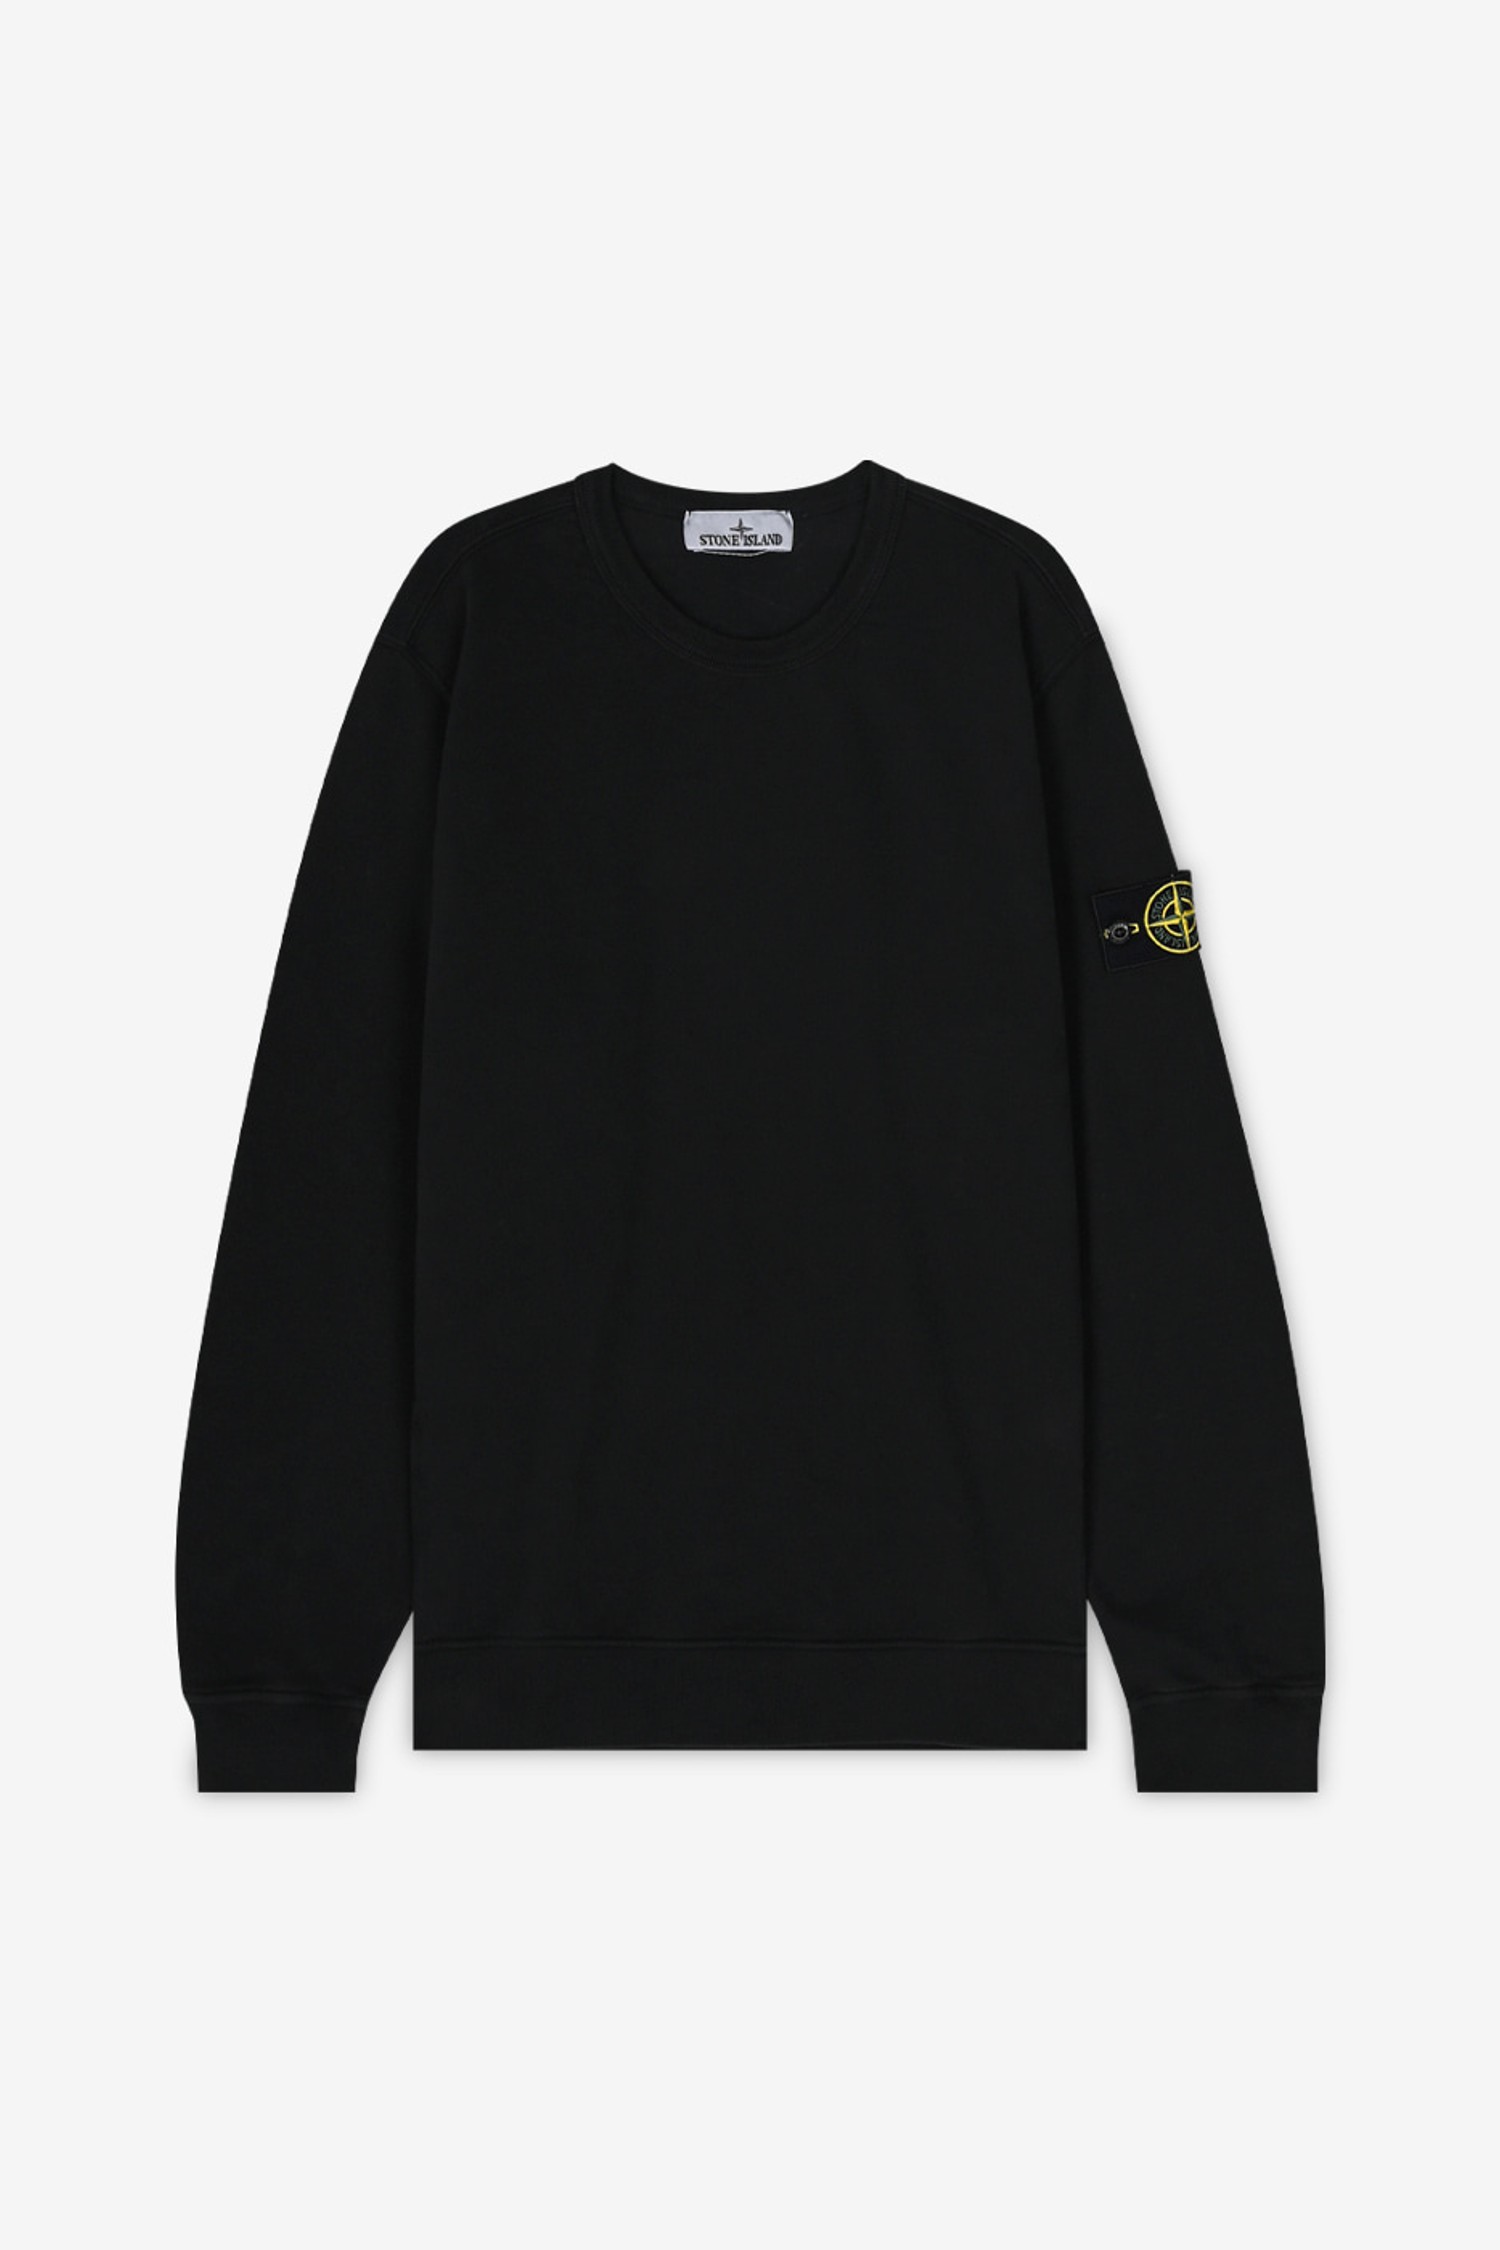 Stone Island Logo Patch Men's Sweater Black 1015540B2-A0029